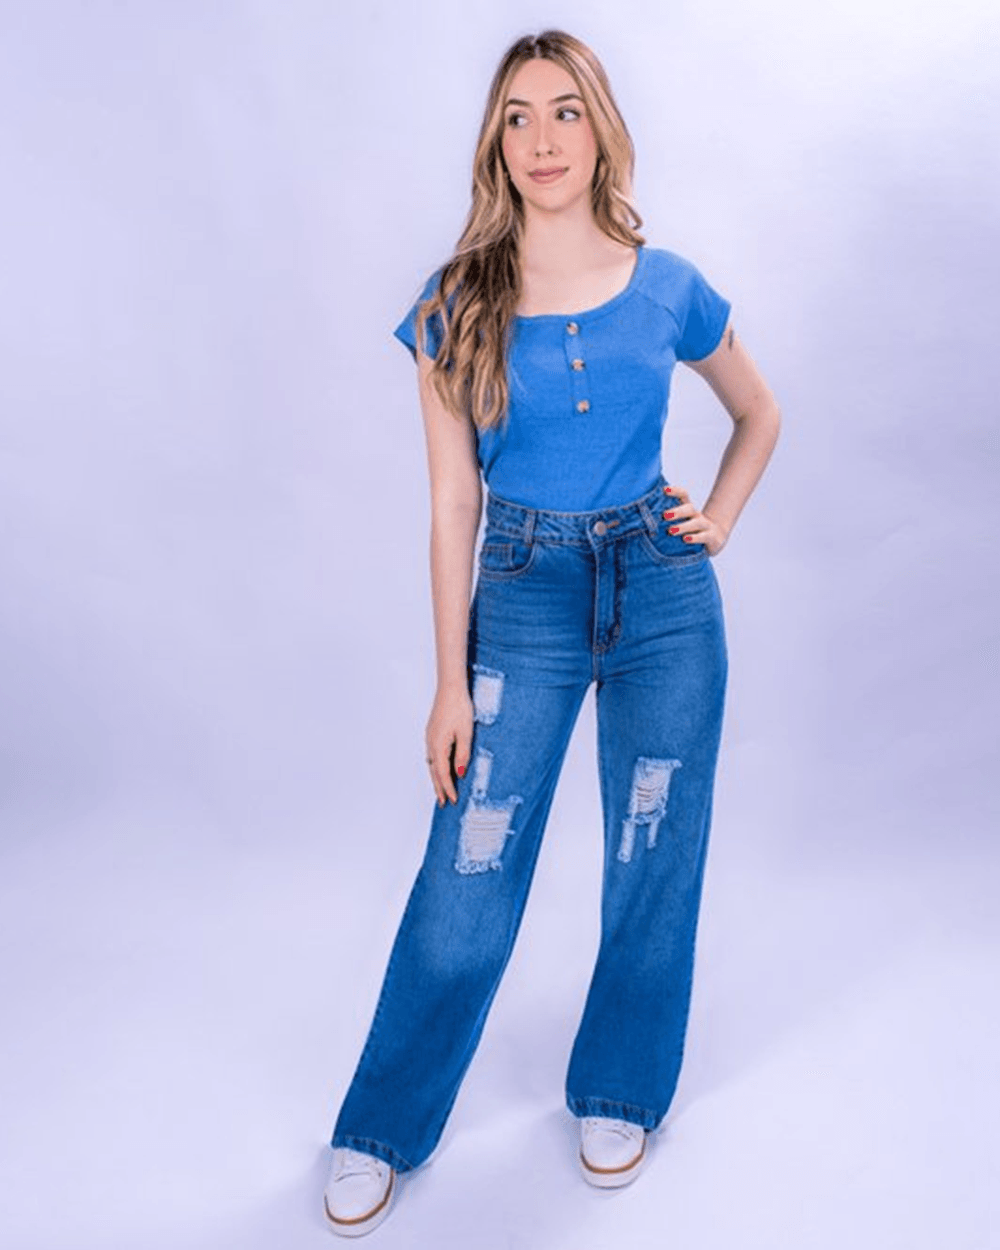 Calça Jeans feminina - Preta Intense